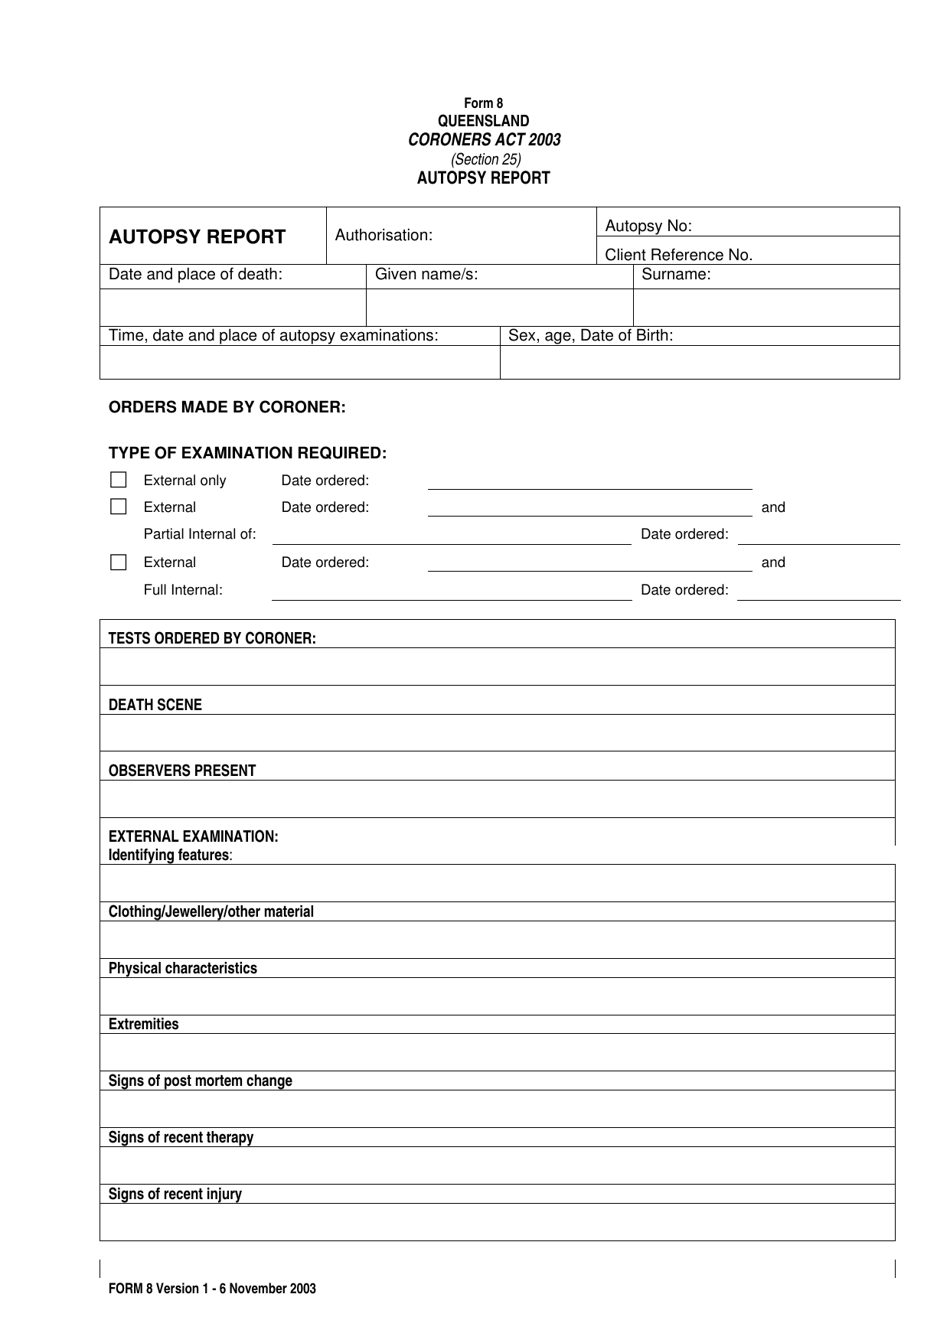 Form 8 Autopsy Report - Queensland, Australia, Page 1